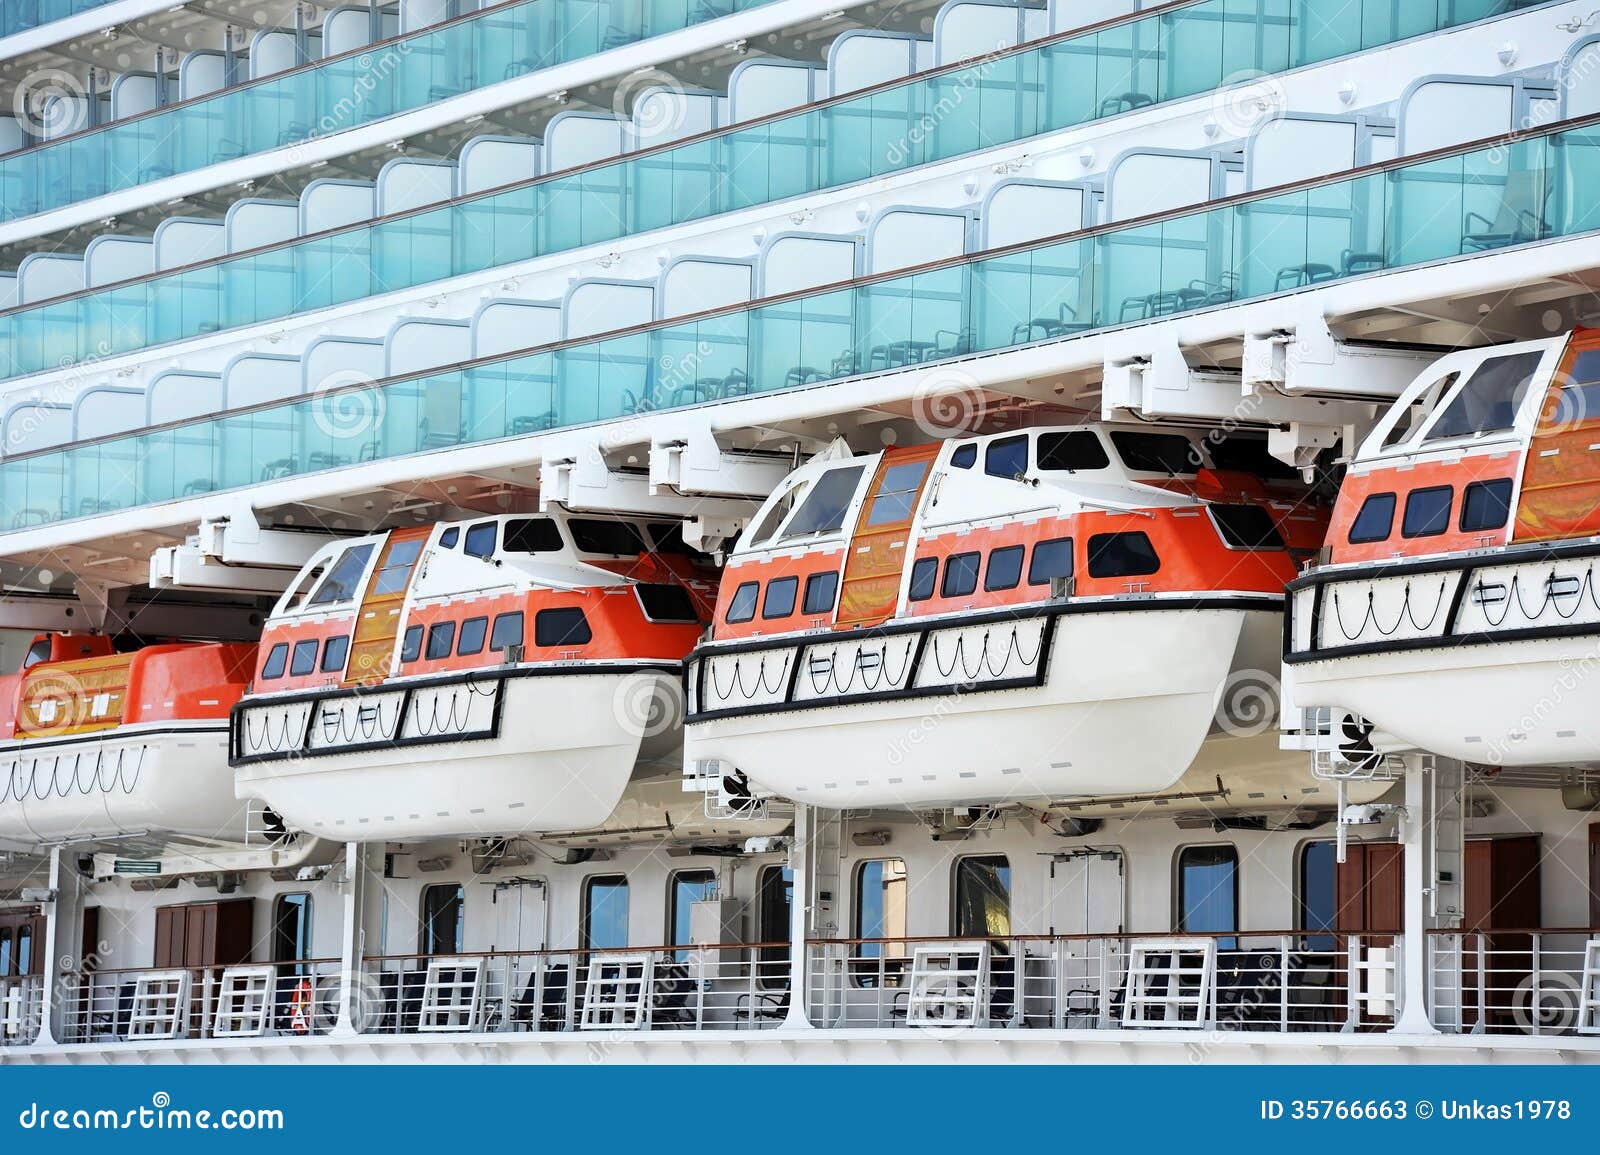 cruise ship safety boats